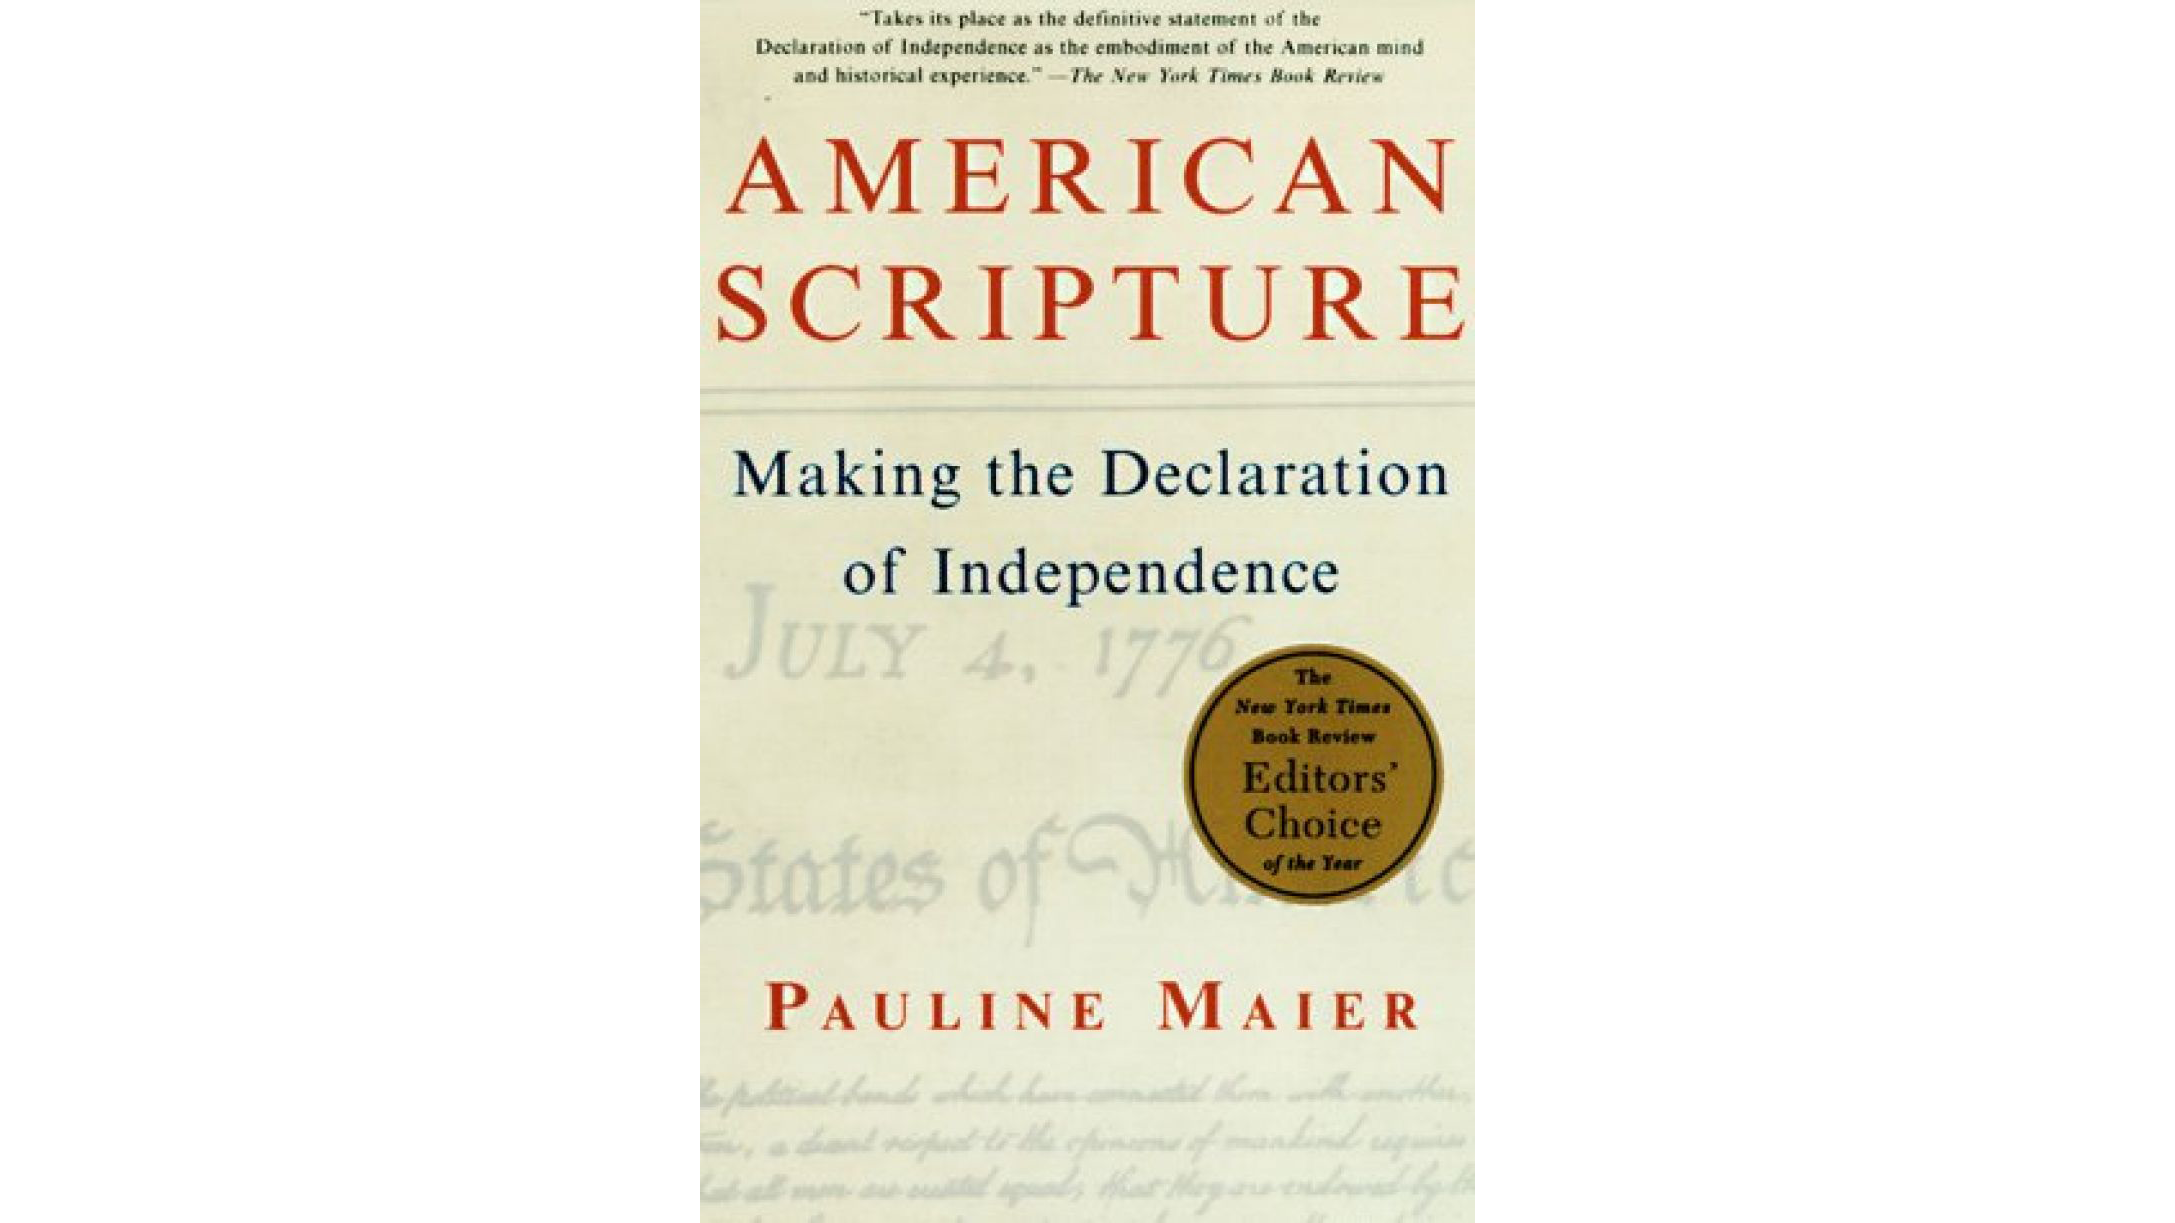 american scripture by pauline maier